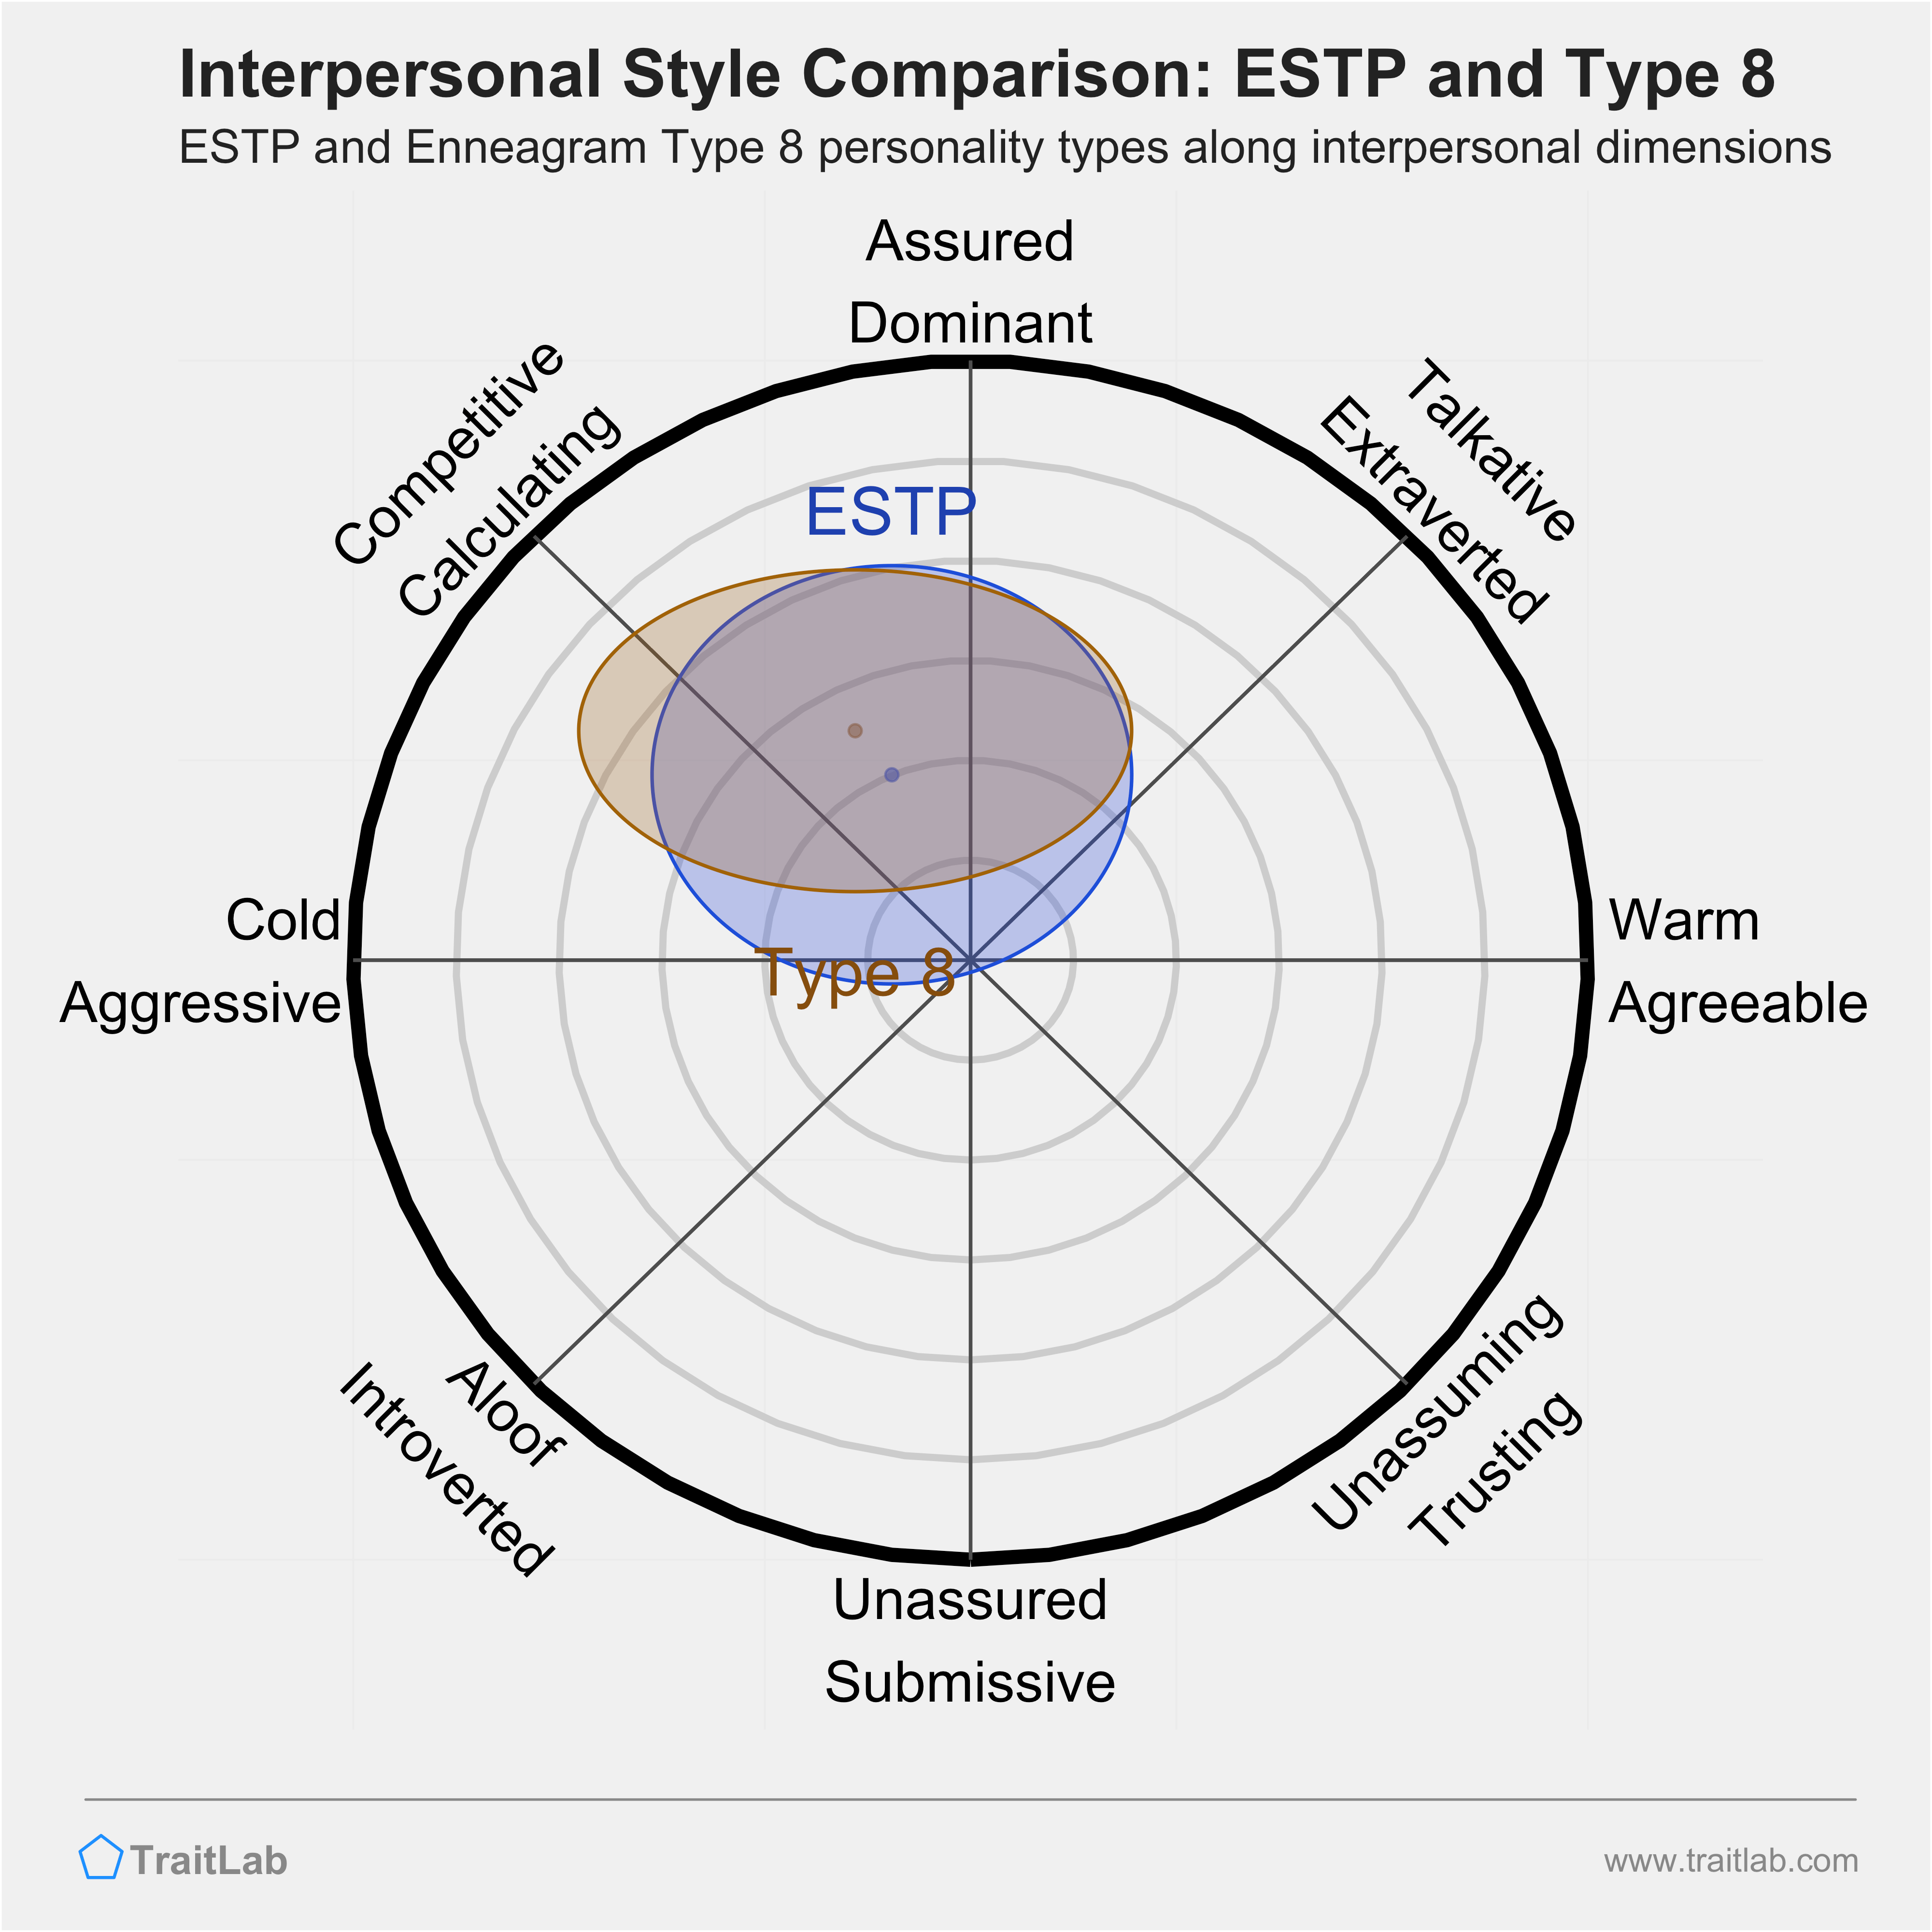 Enneagram ESTP and Type 8 comparison across interpersonal dimensions